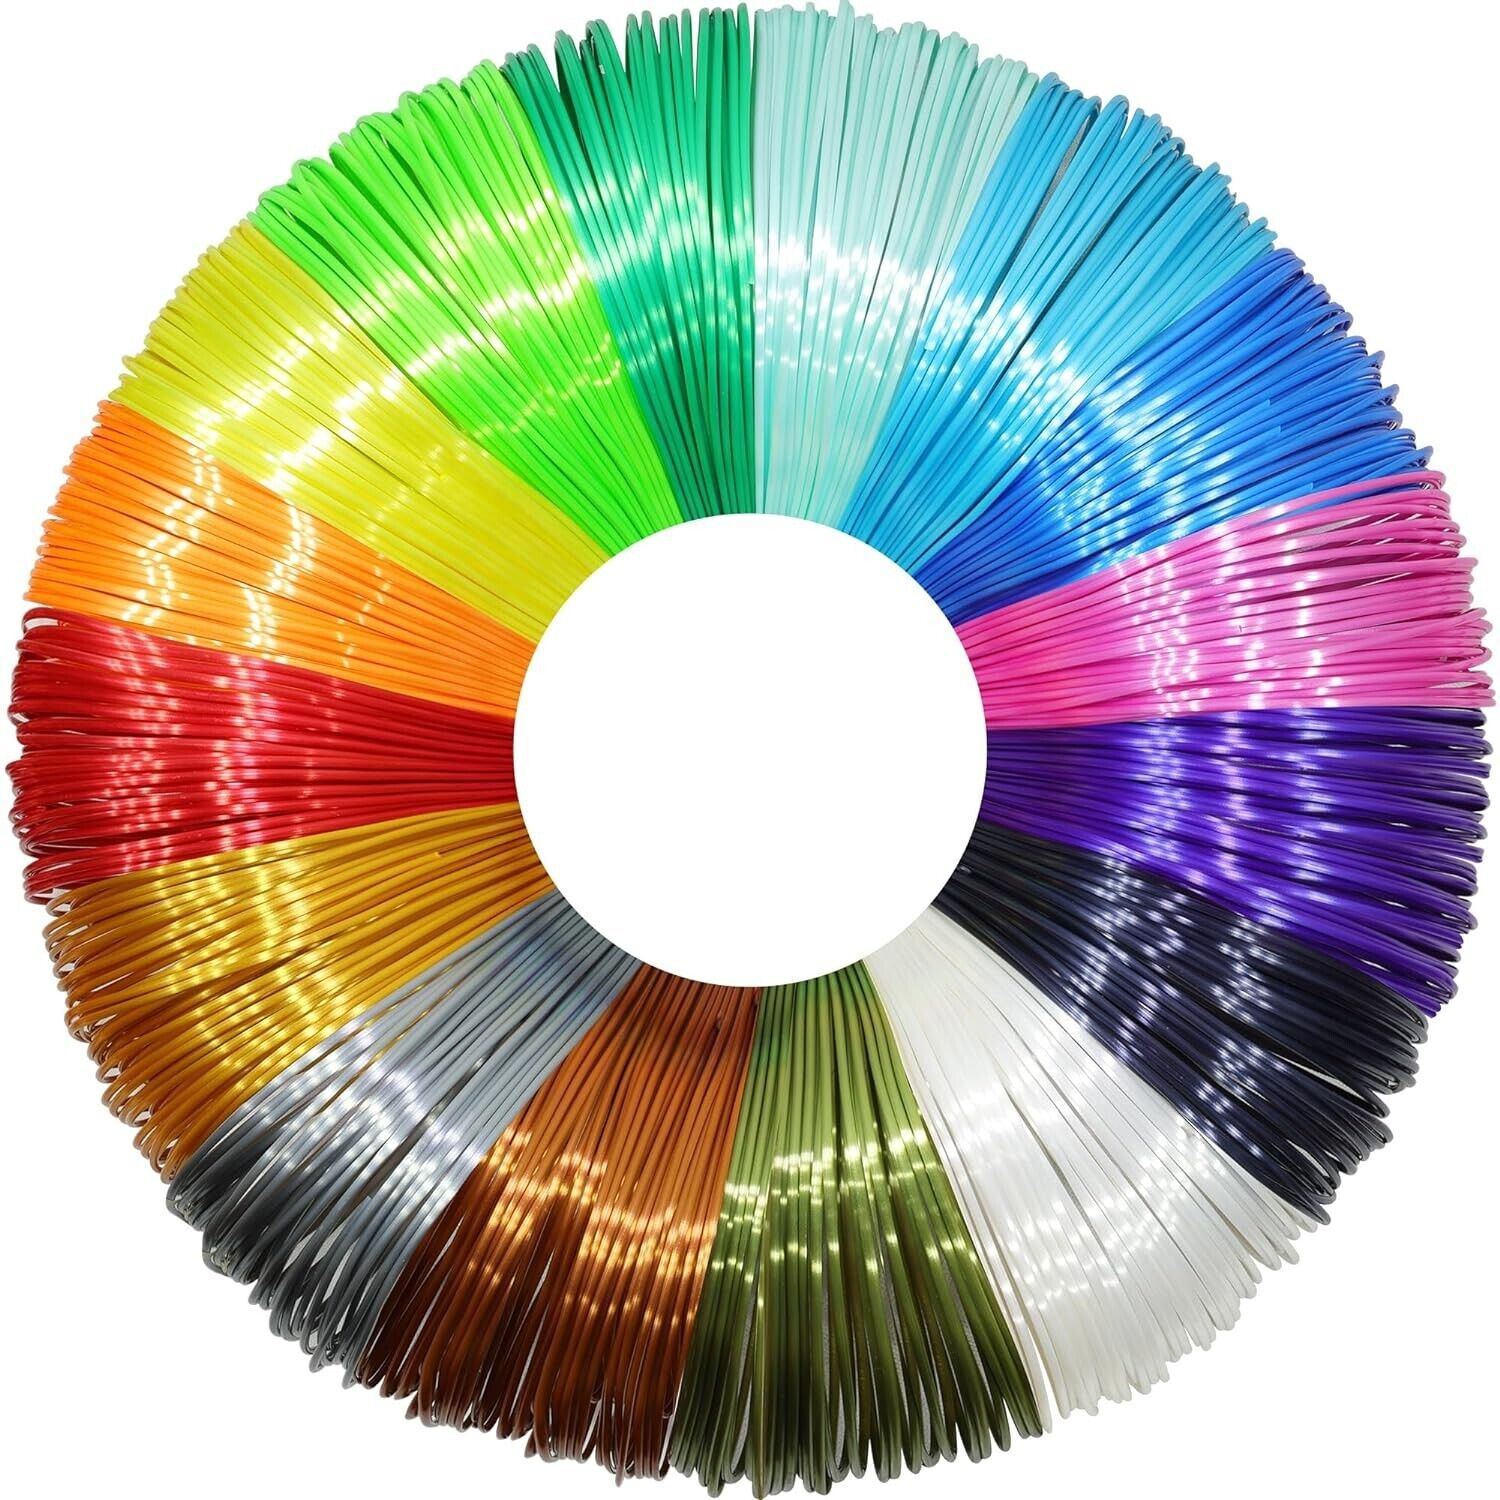 MIKA3D 16 Colors Silk Shiny PLA Filament Sample Pack, Each Color 4 Meter Length,